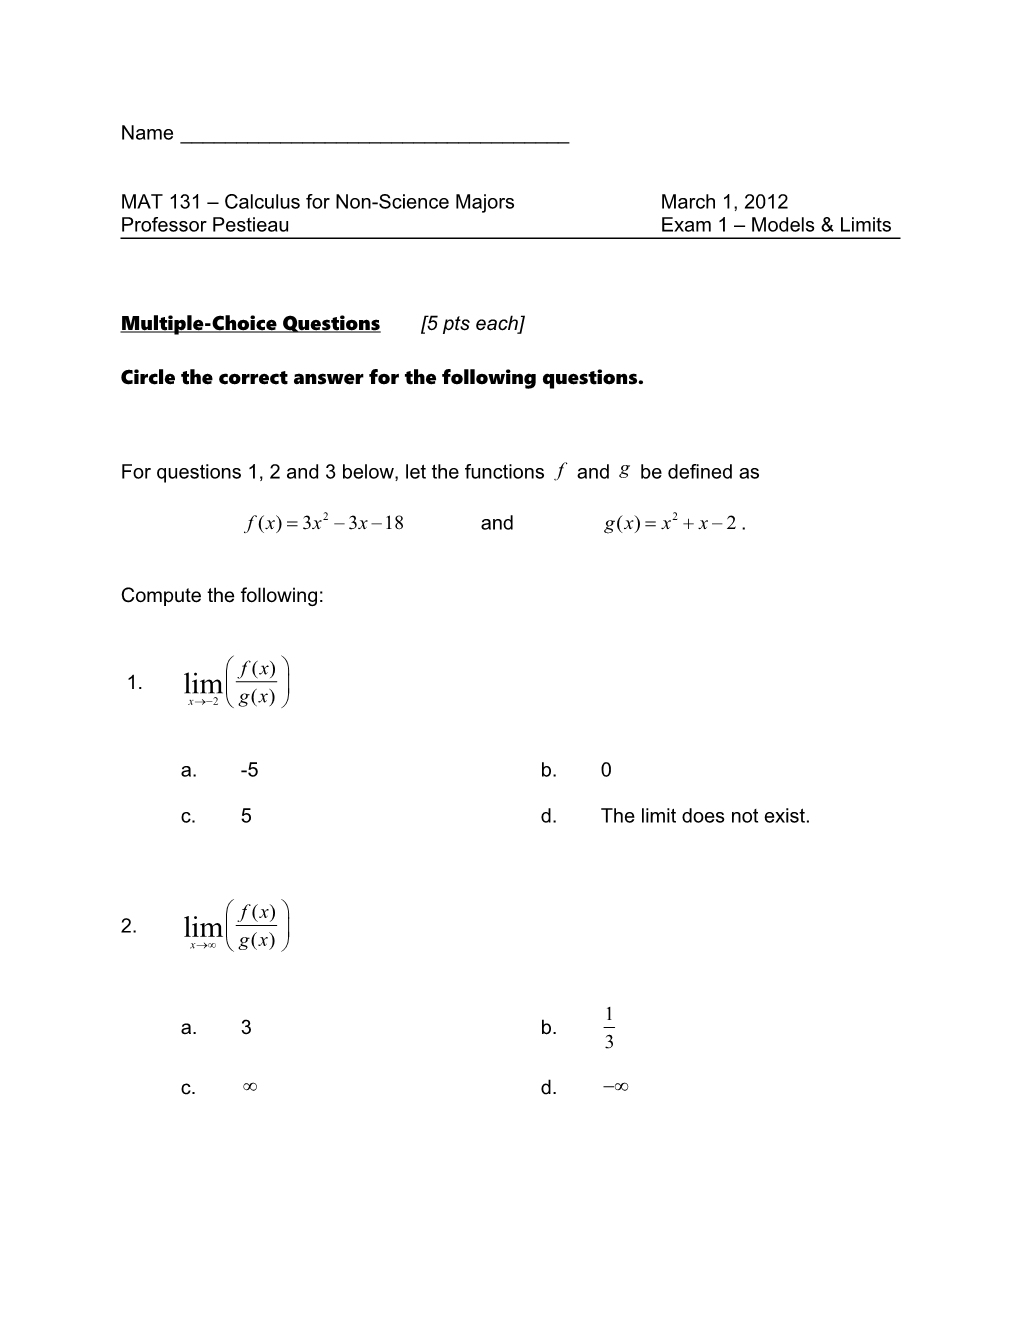 MAT 131 Calculus for Non-Science Majorsmarch 1, 2012